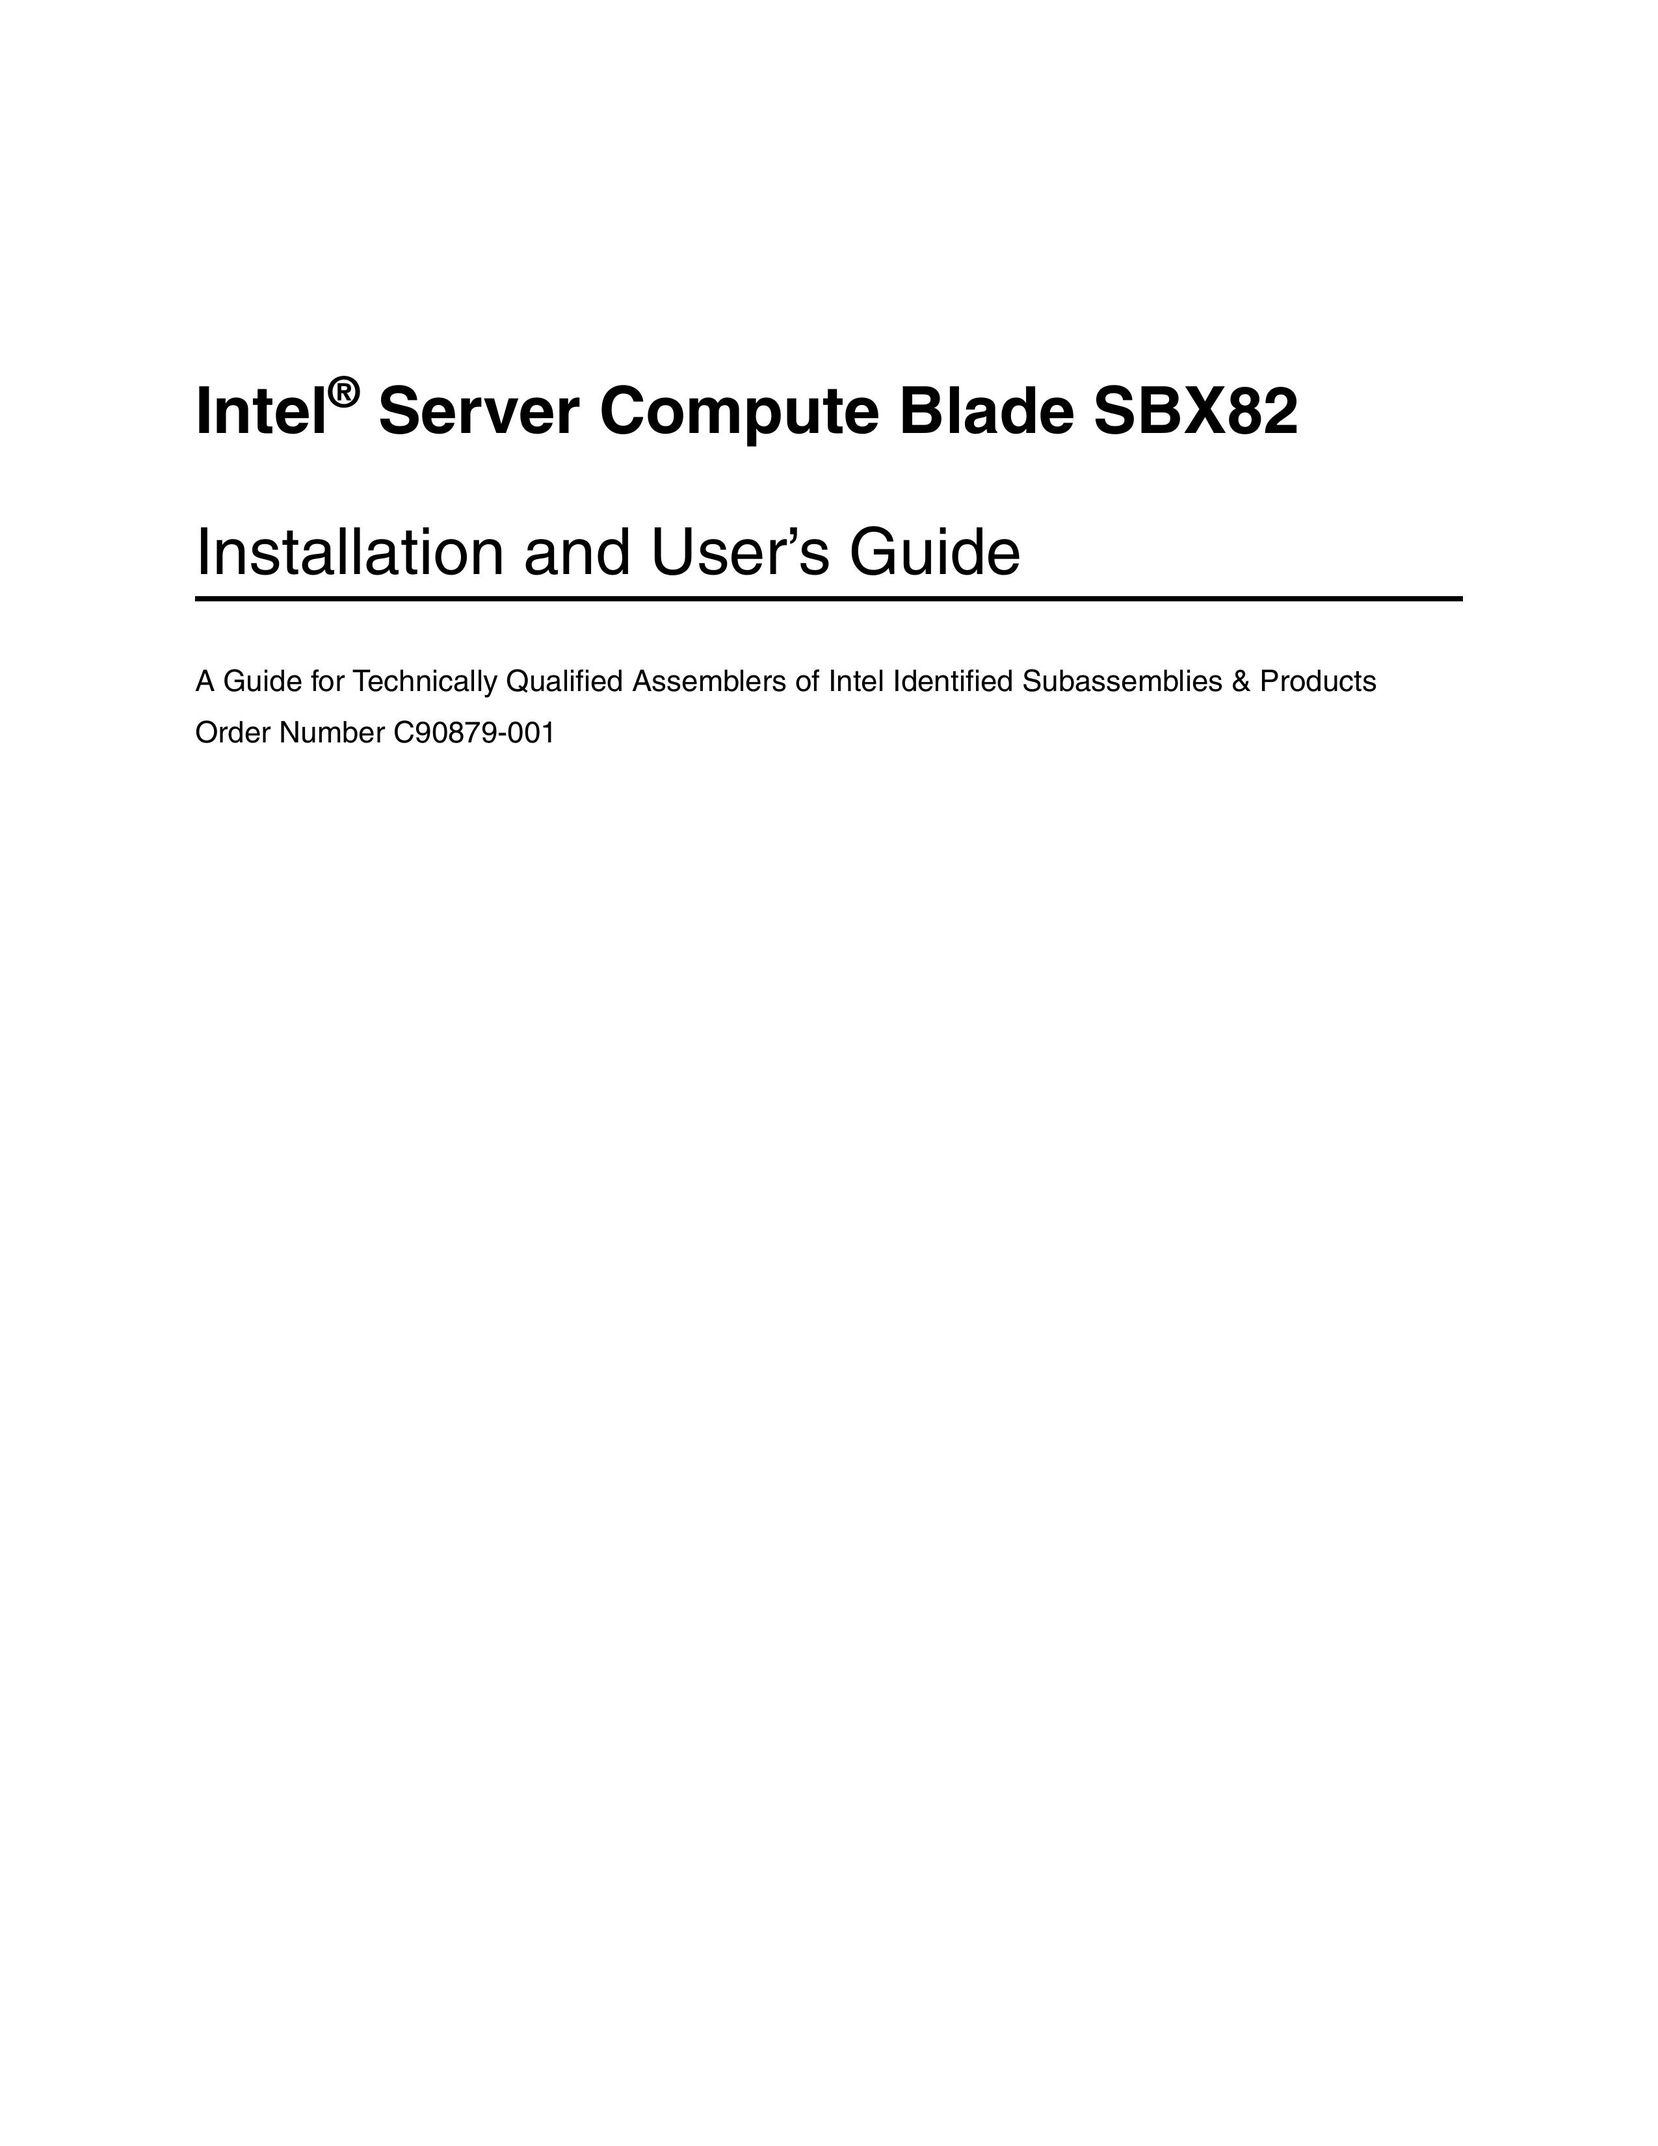 Intel SBX82 Saw User Manual